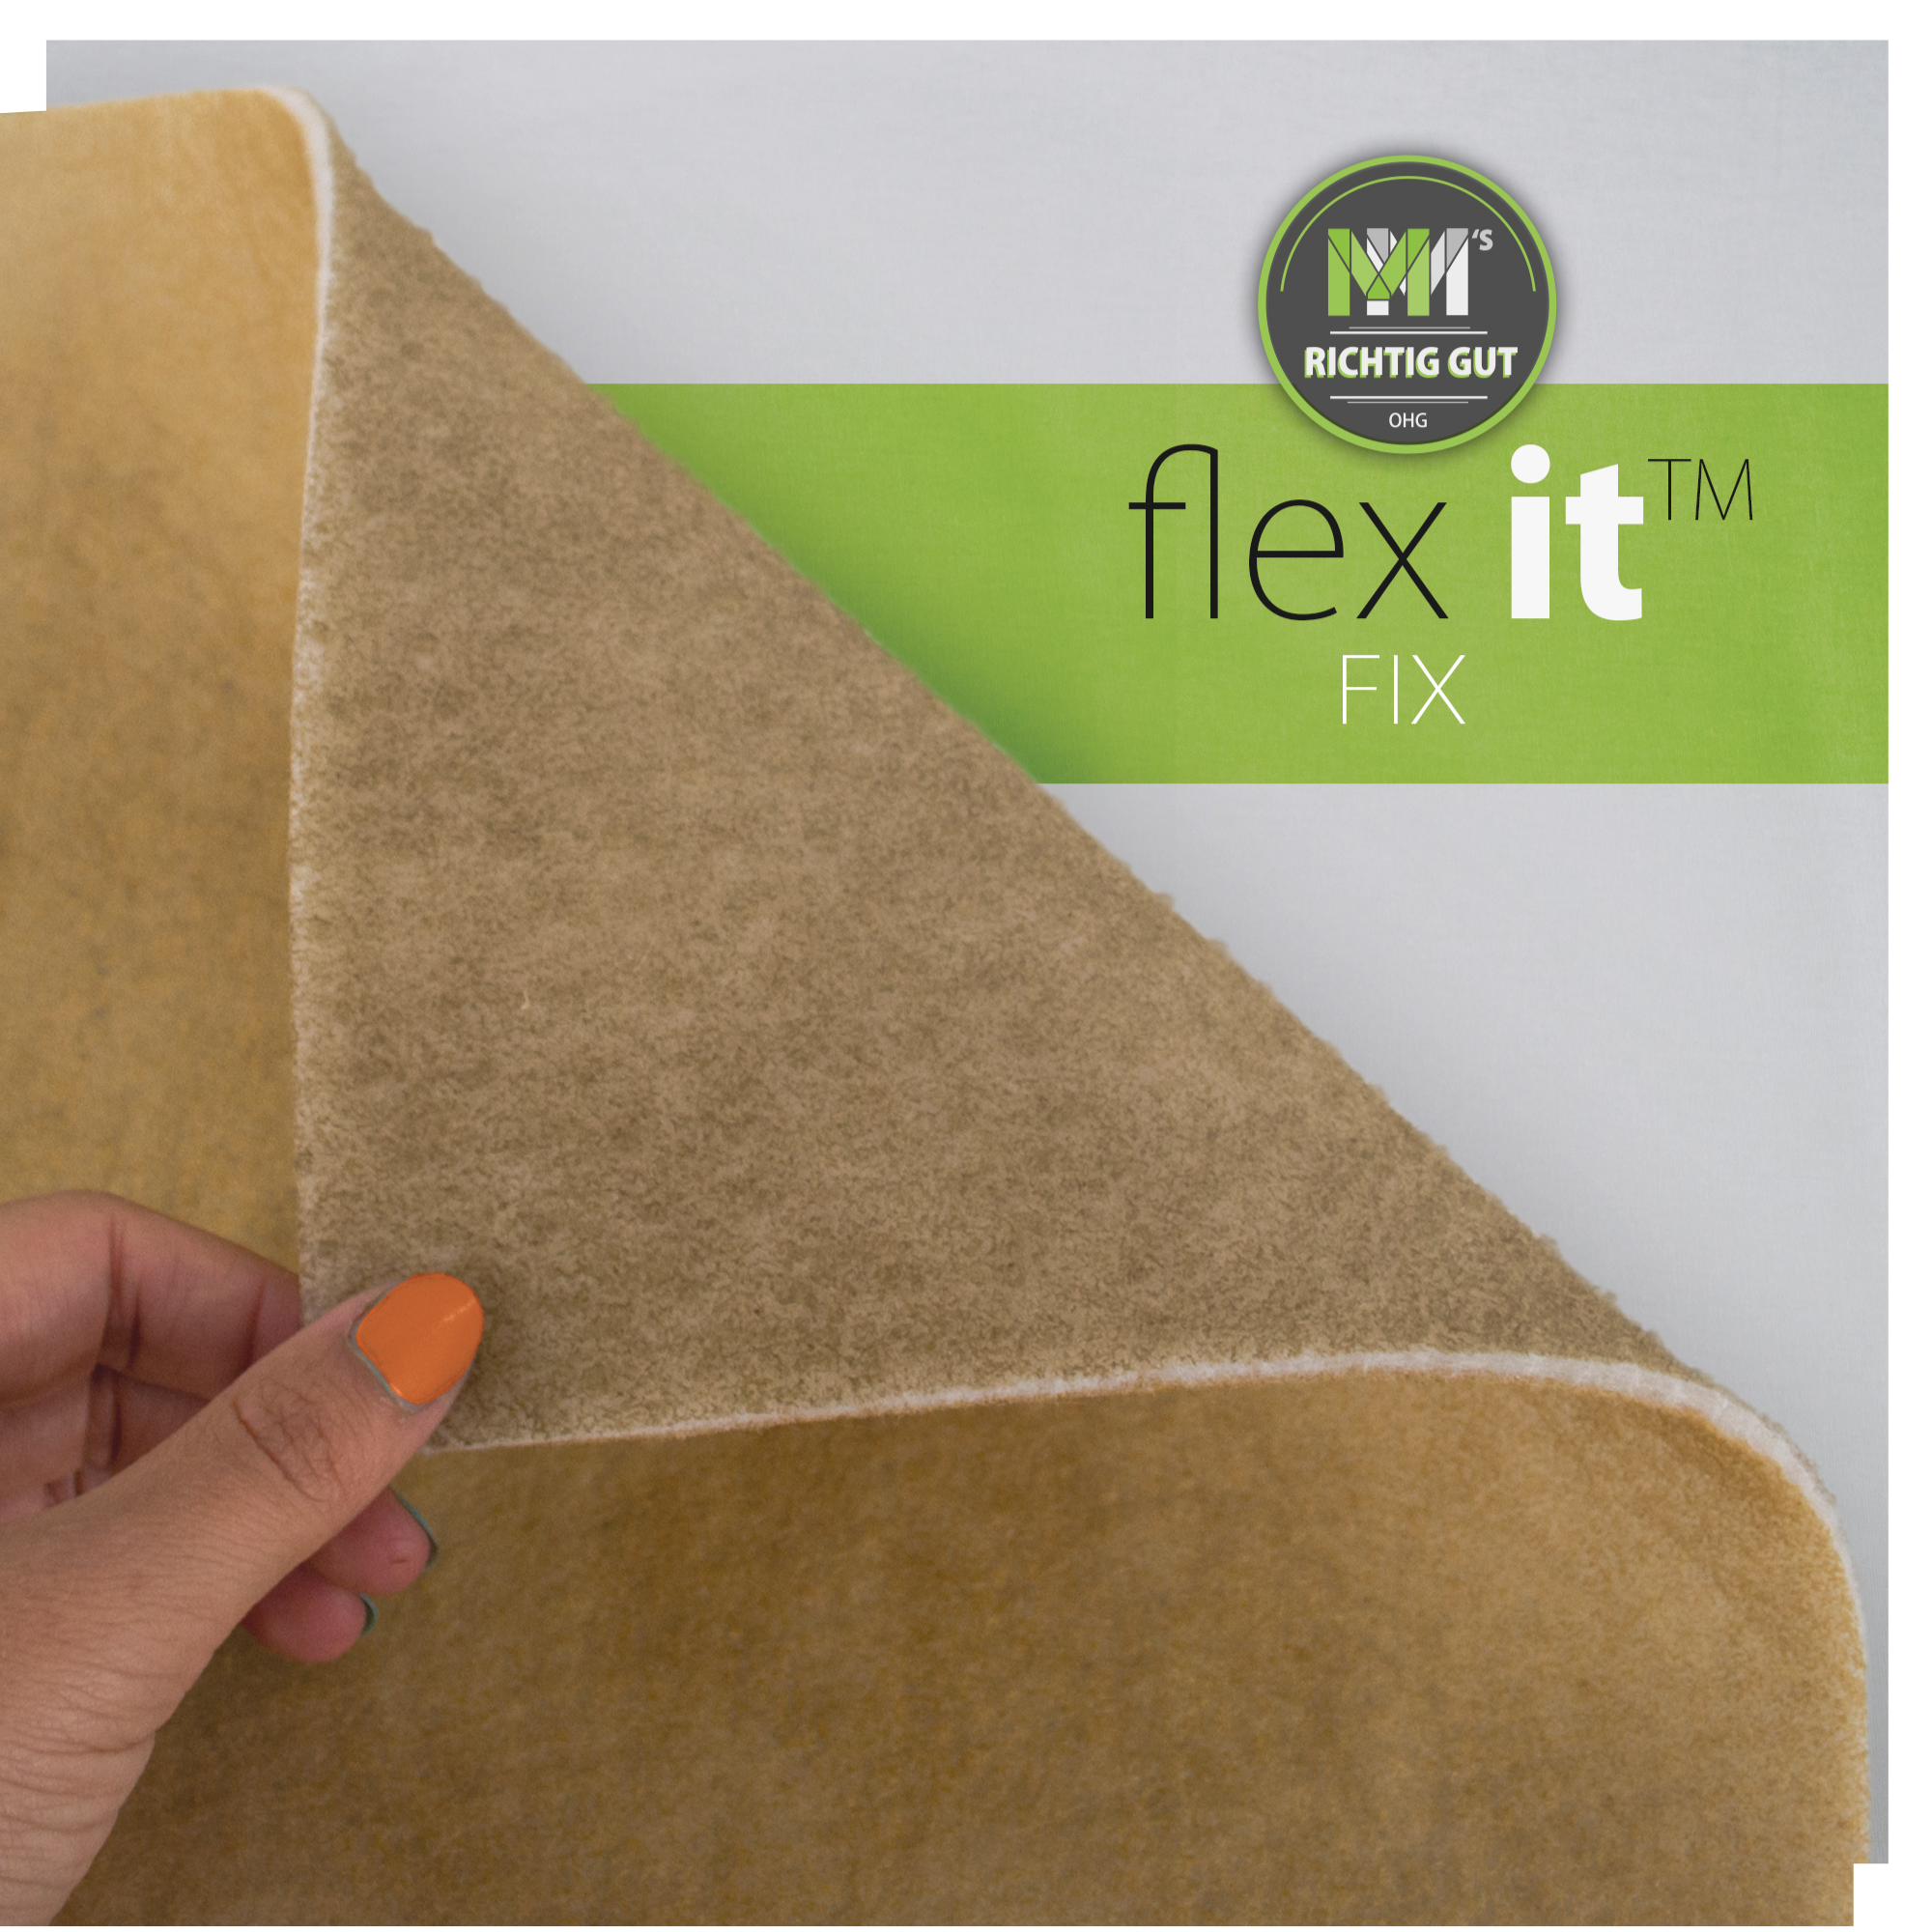 Teppichunterlage flex it Fix – flex it - Shop